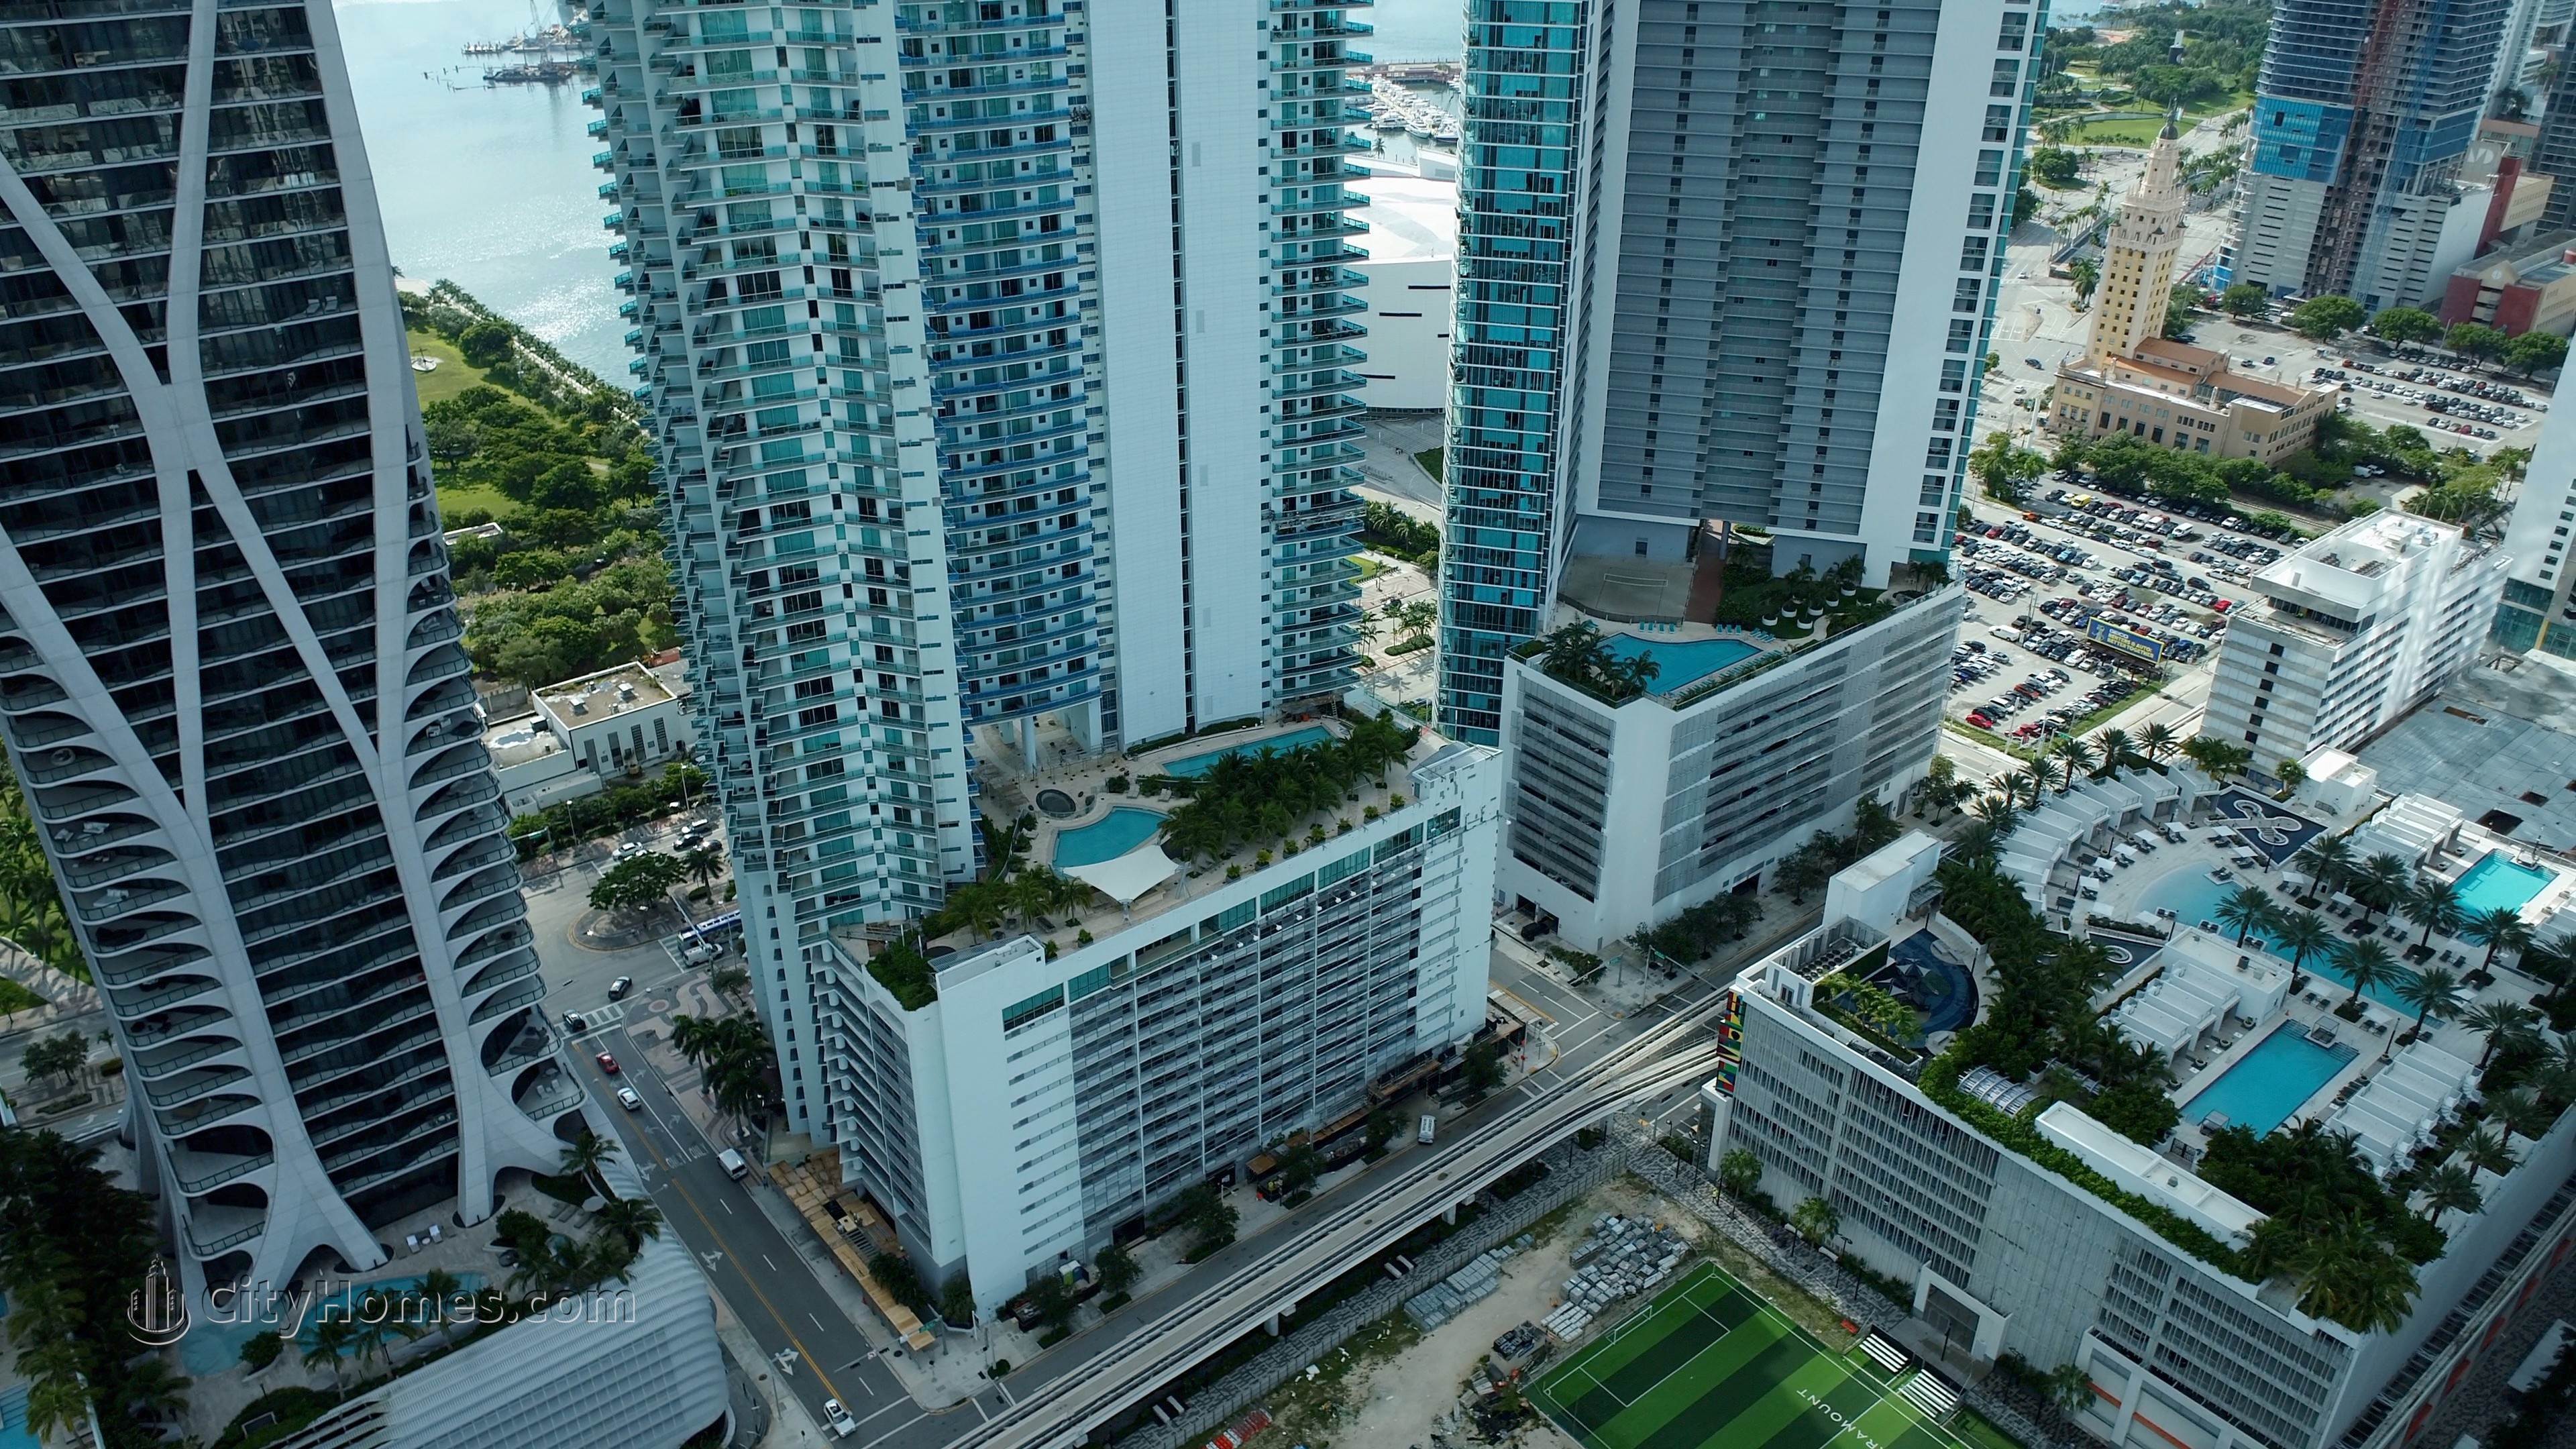 4. 900 Biscayne Bay building at 900 Biscayne Boulevard, Miami, FL 33132